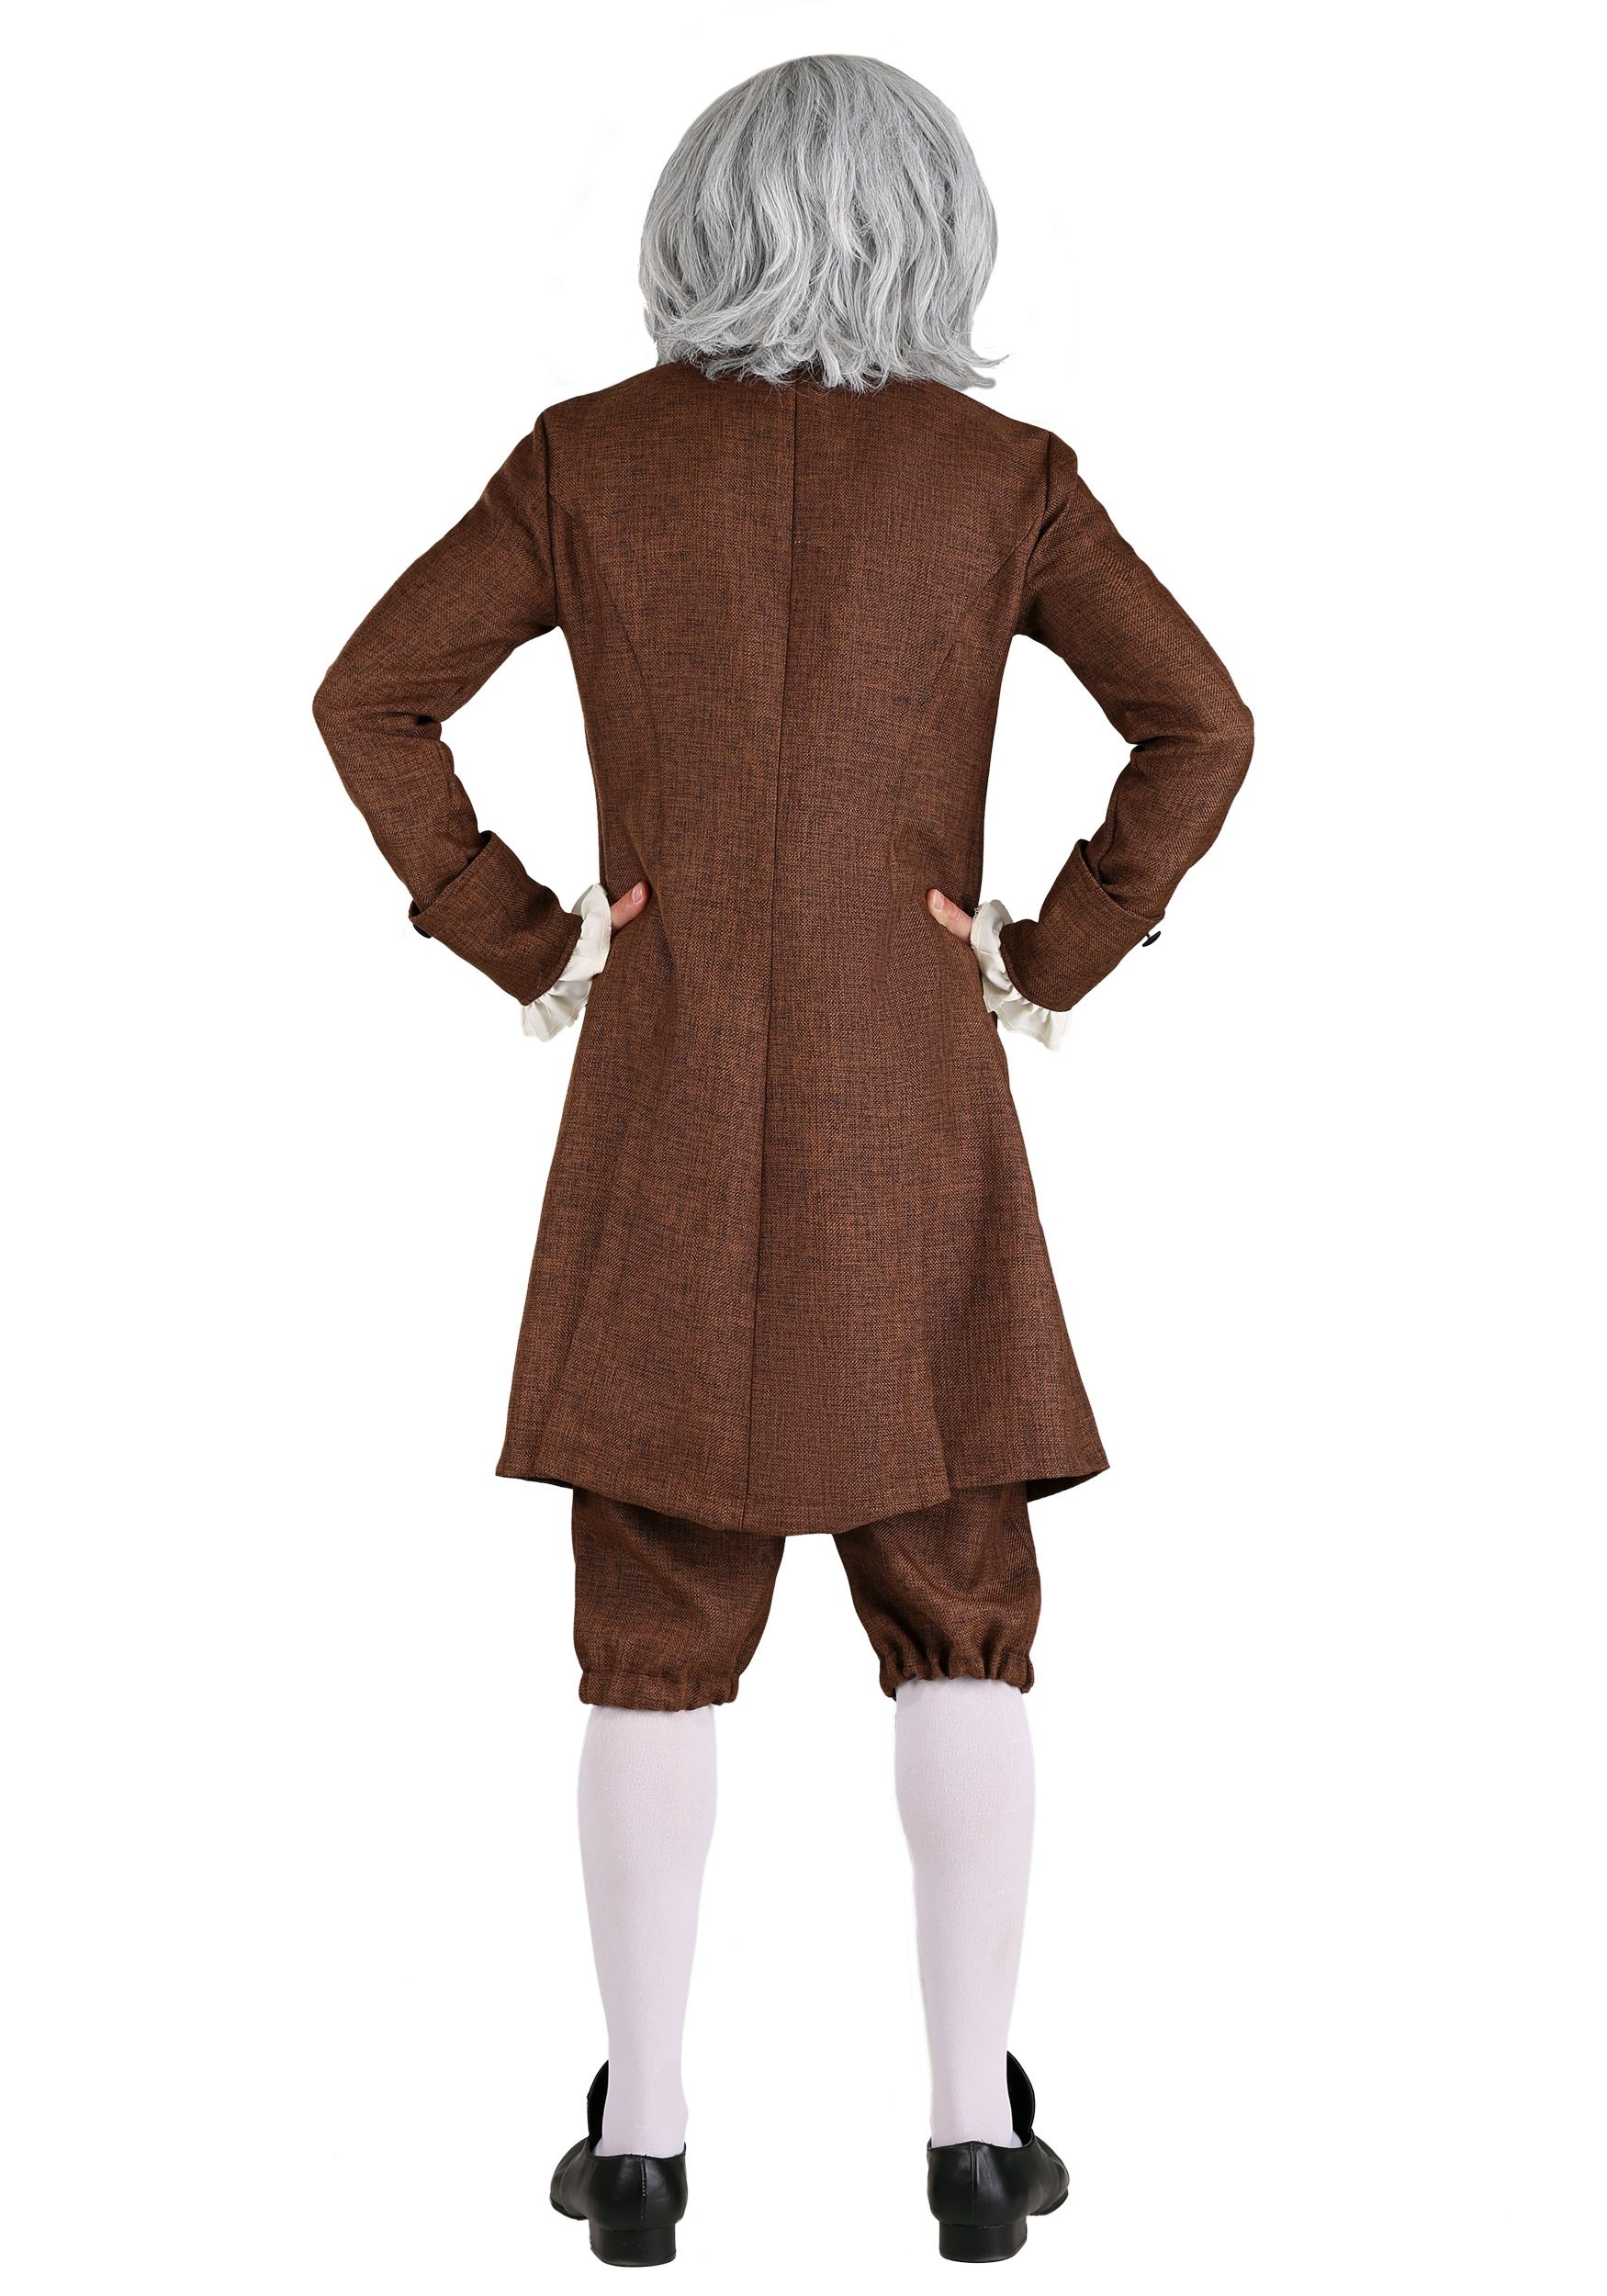 Plus Size Colonial Benjamin Franklin Men's Costume